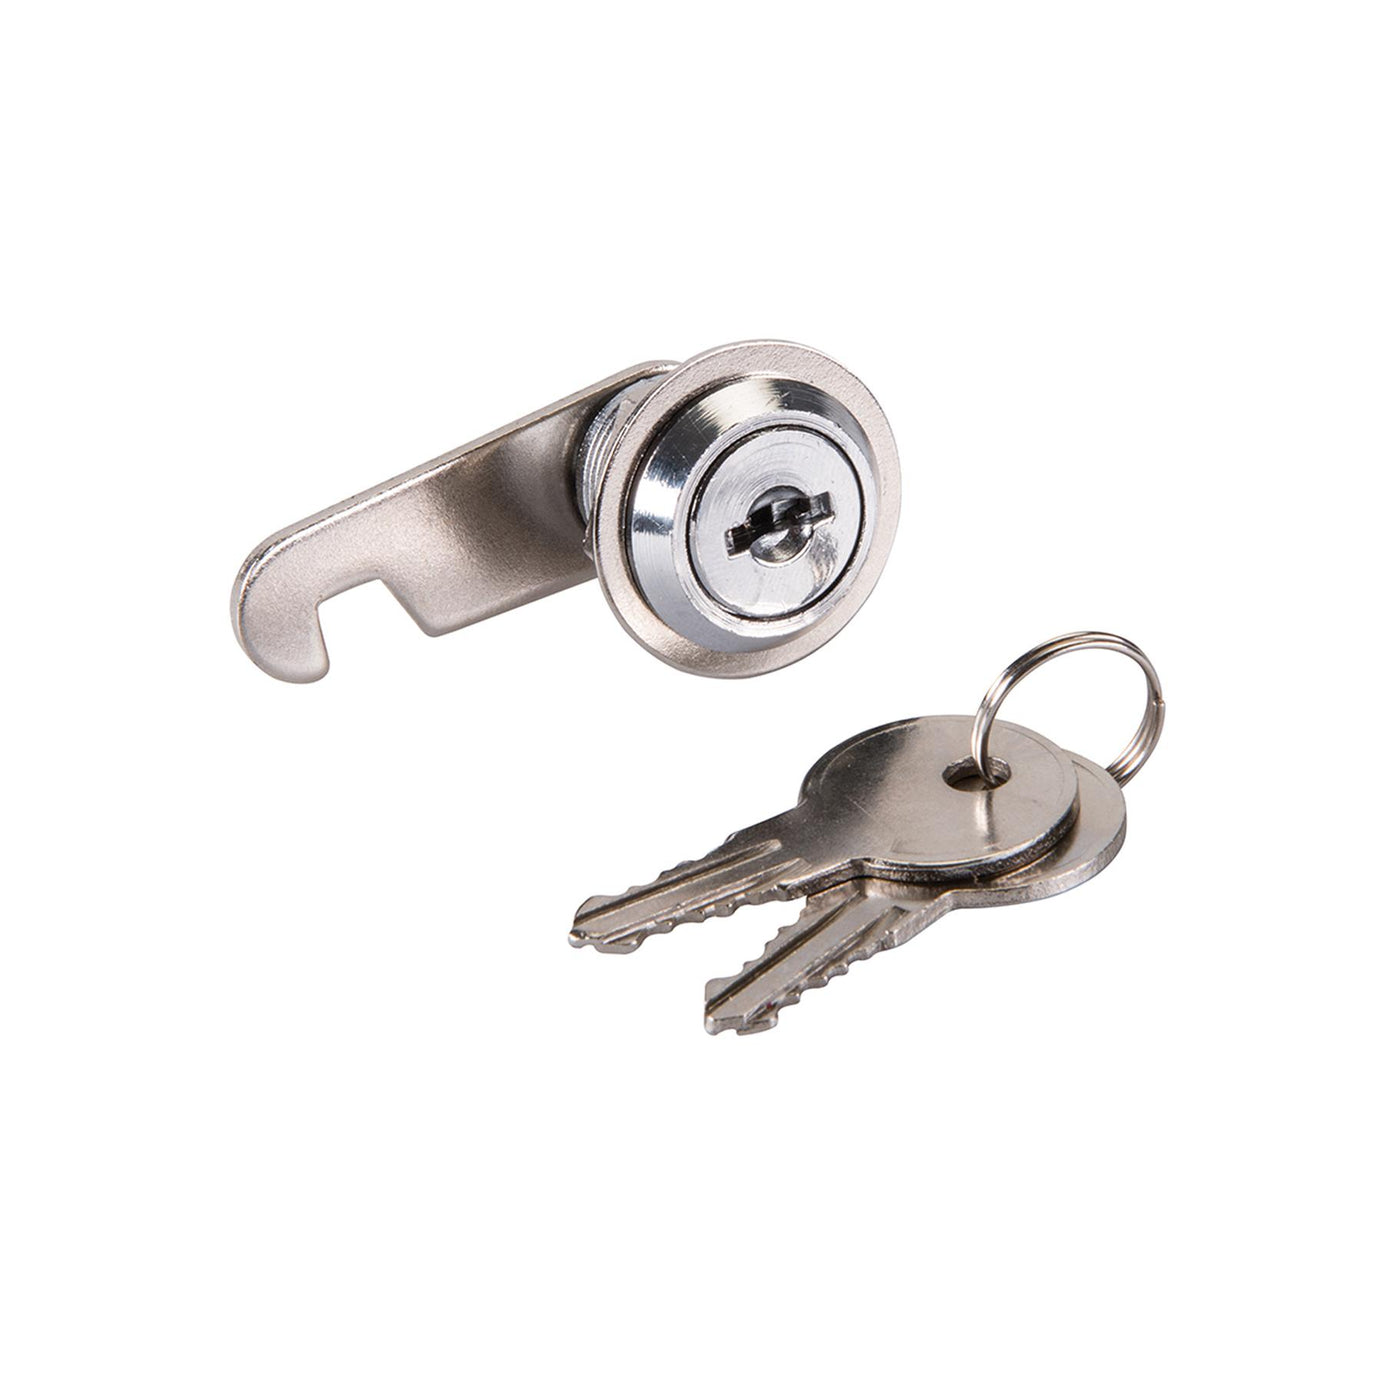 27mm Cam Lock For Filing Cabinet Mailbox Drawer Locker Secure Keys Nickel Plate